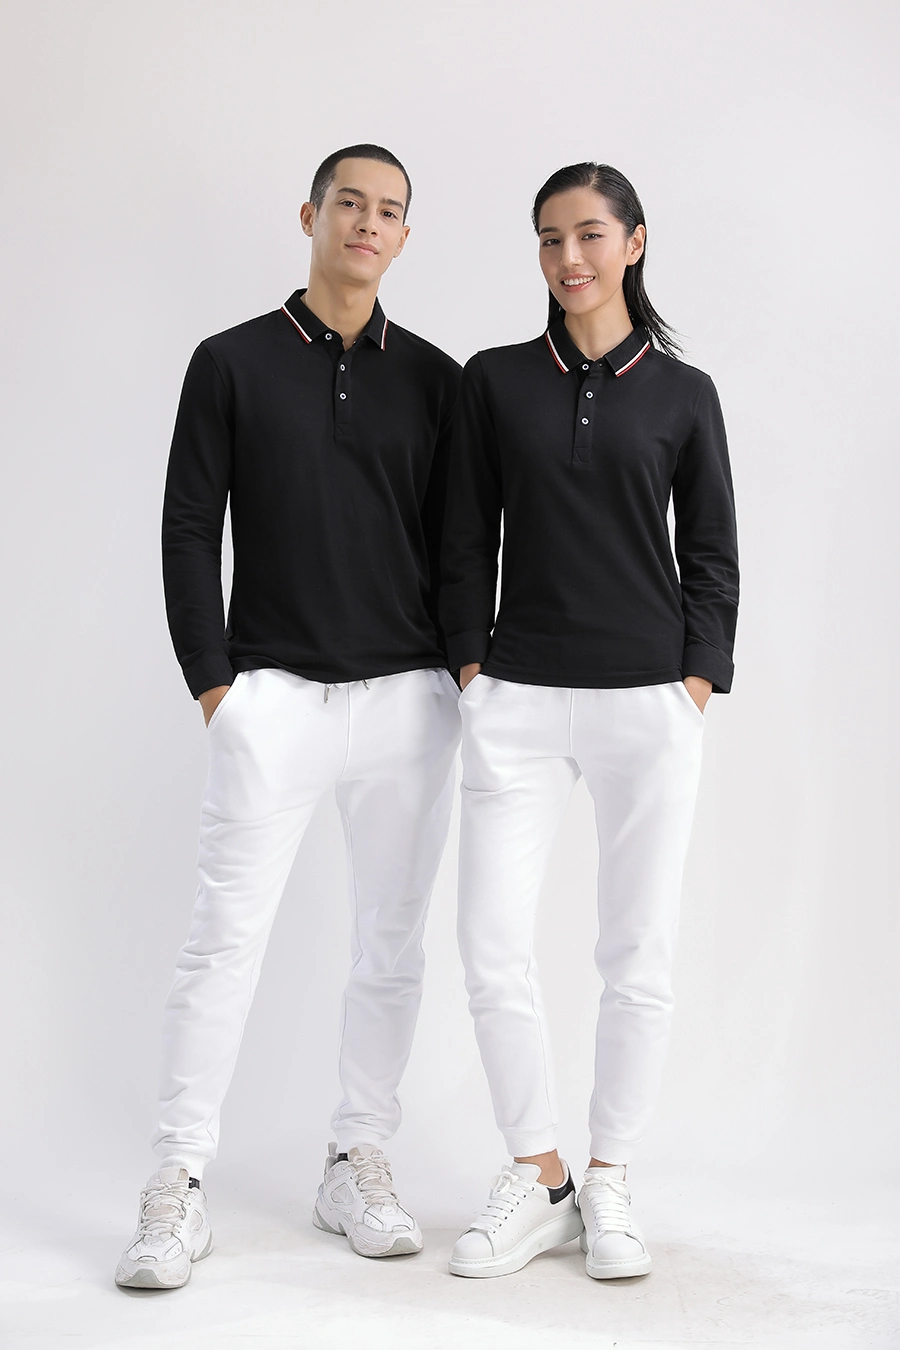 Men Shirts Polo Polo Shirts Women White T Shirt